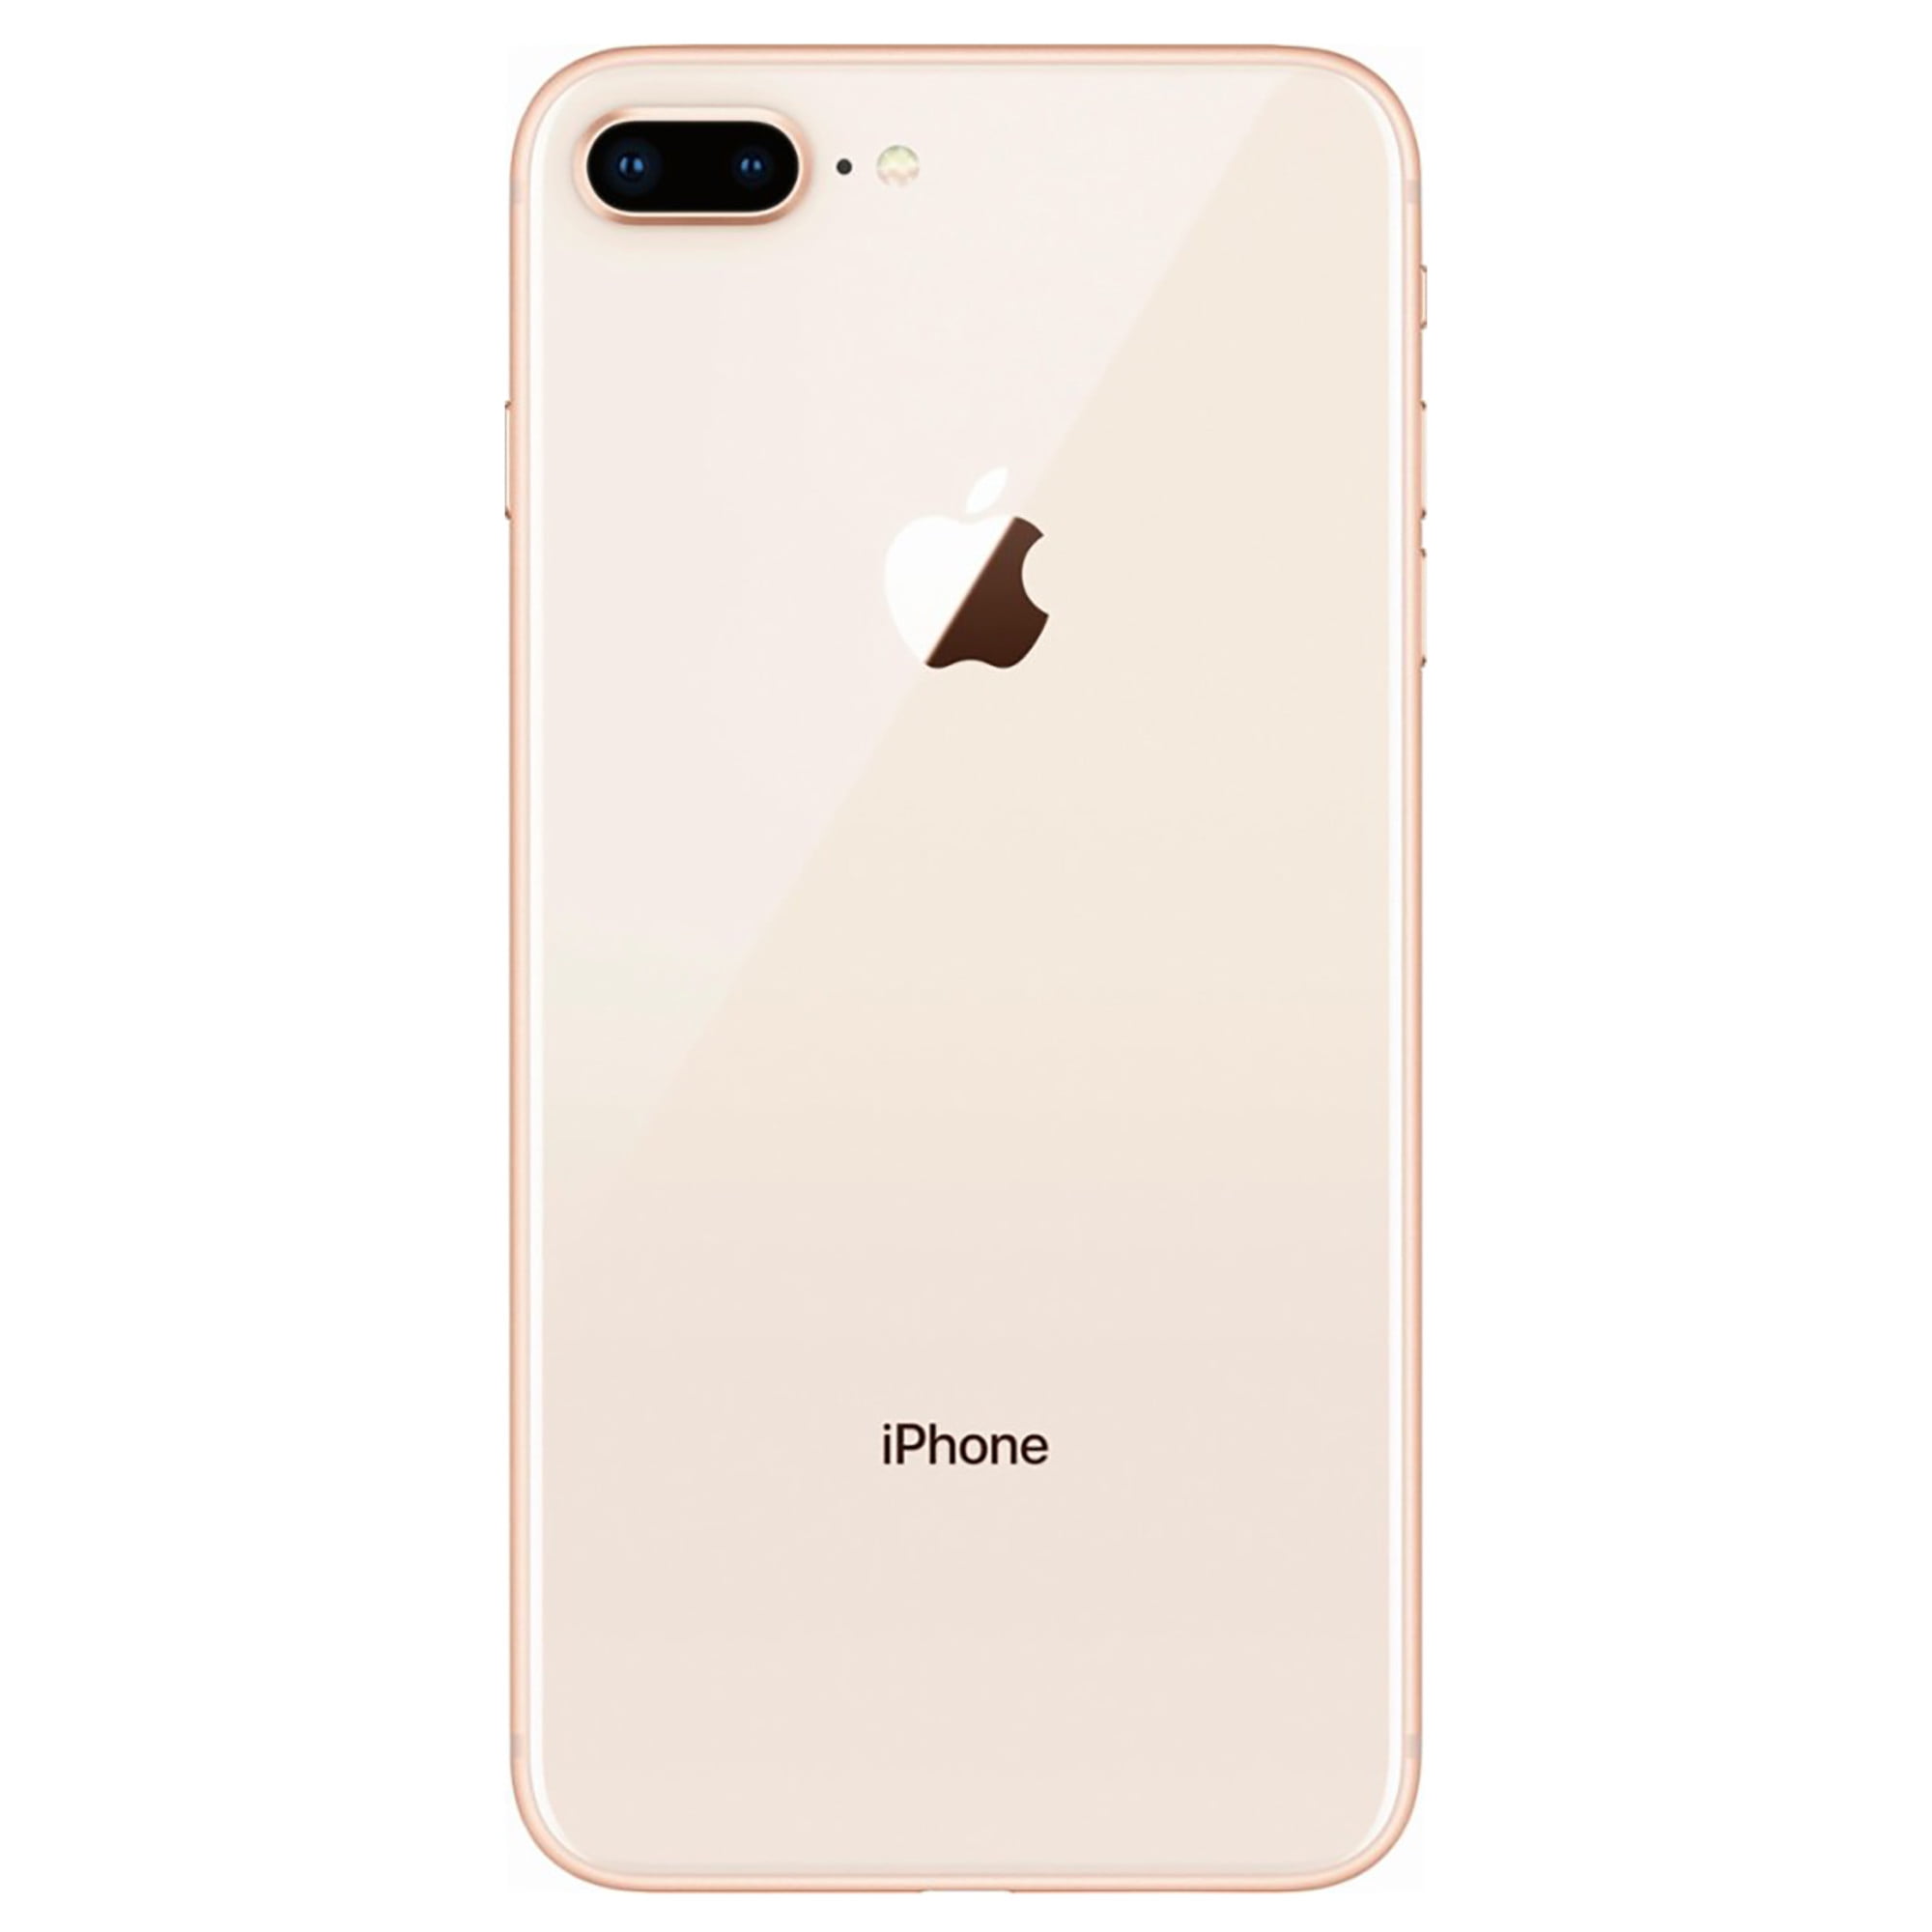 Apple iPhone 8 Plus 256GB Gold Fully Unlocked (Verizon + AT&T + 